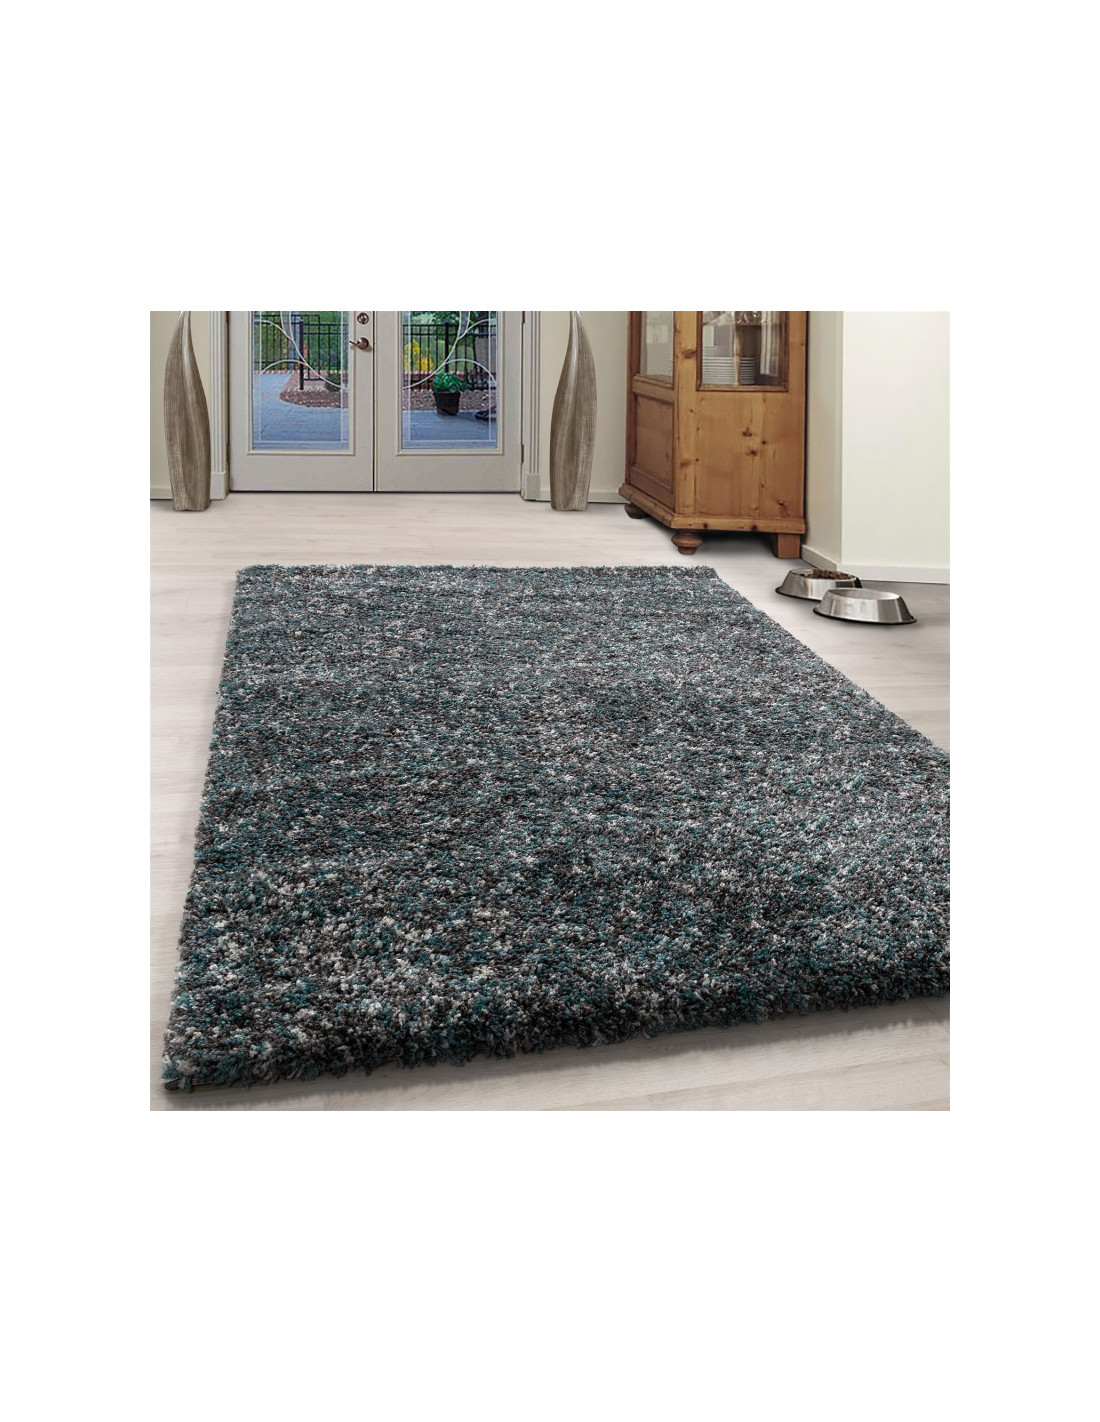 Hoogpolig tapijt woonkamer hoge kwaliteit hoogpolig blauw grijs wit gemêleerd